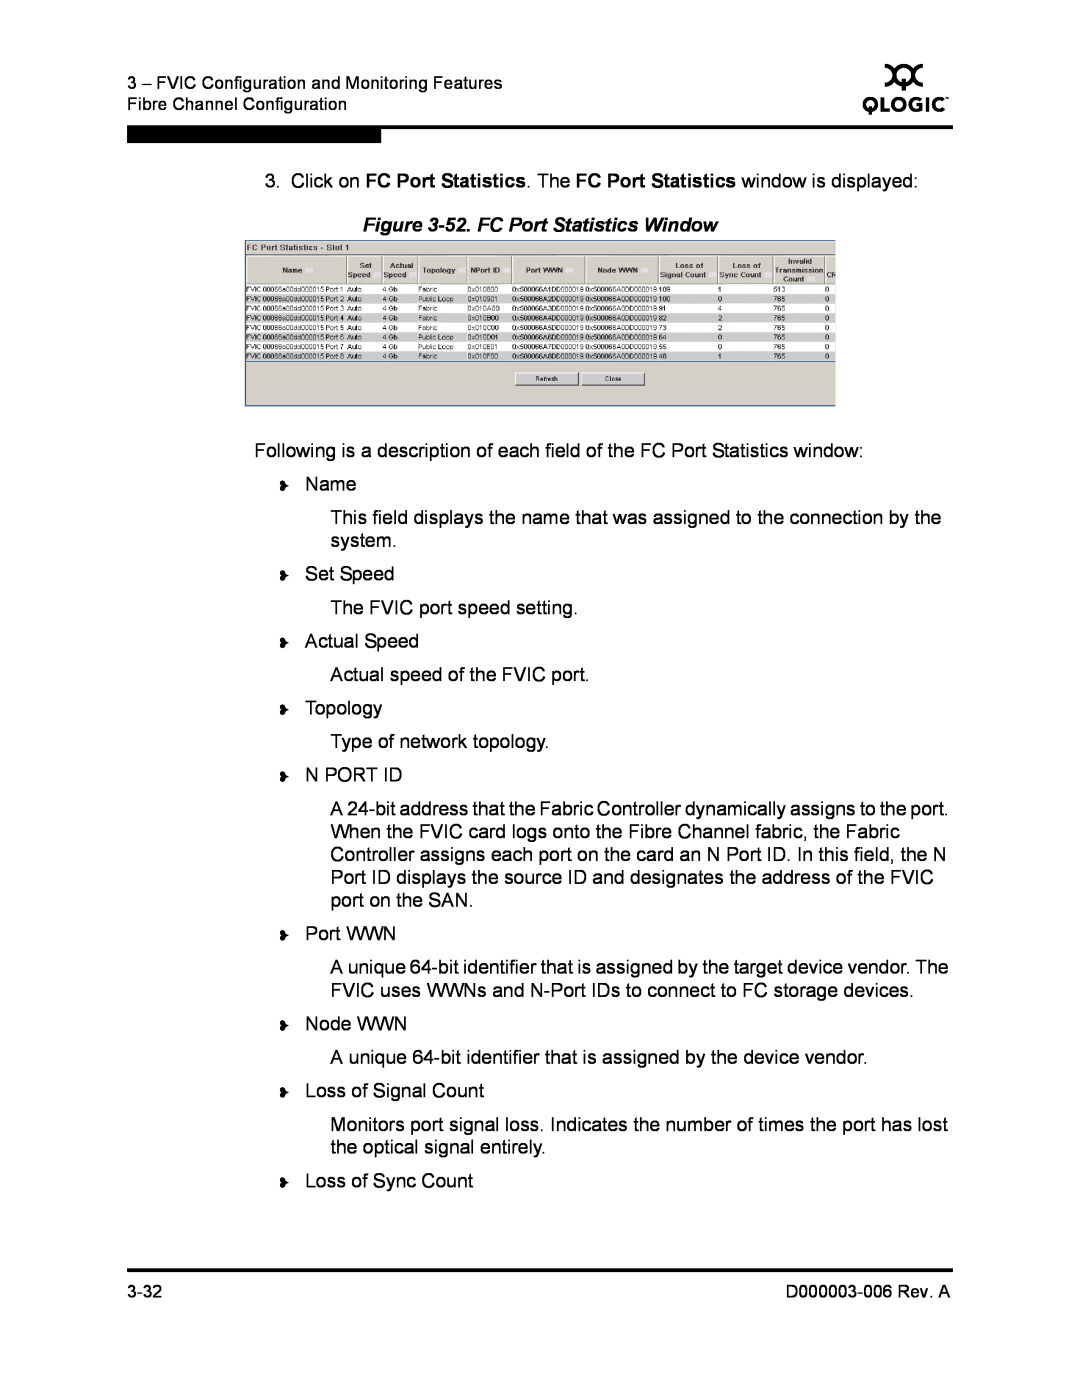 Q-Logic 9000 manual 52. FC Port Statistics Window 